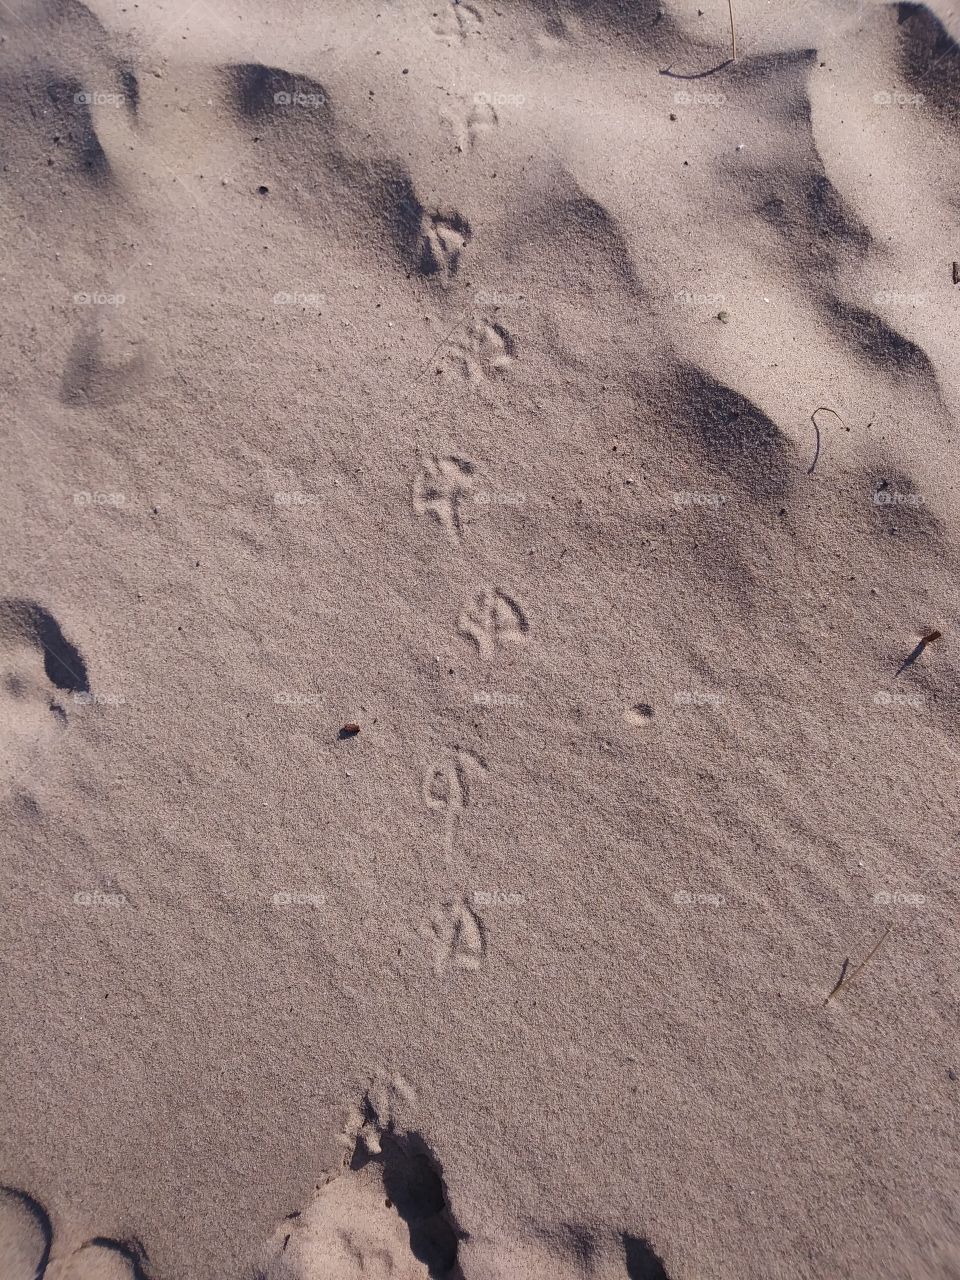 Bird footprints on beach